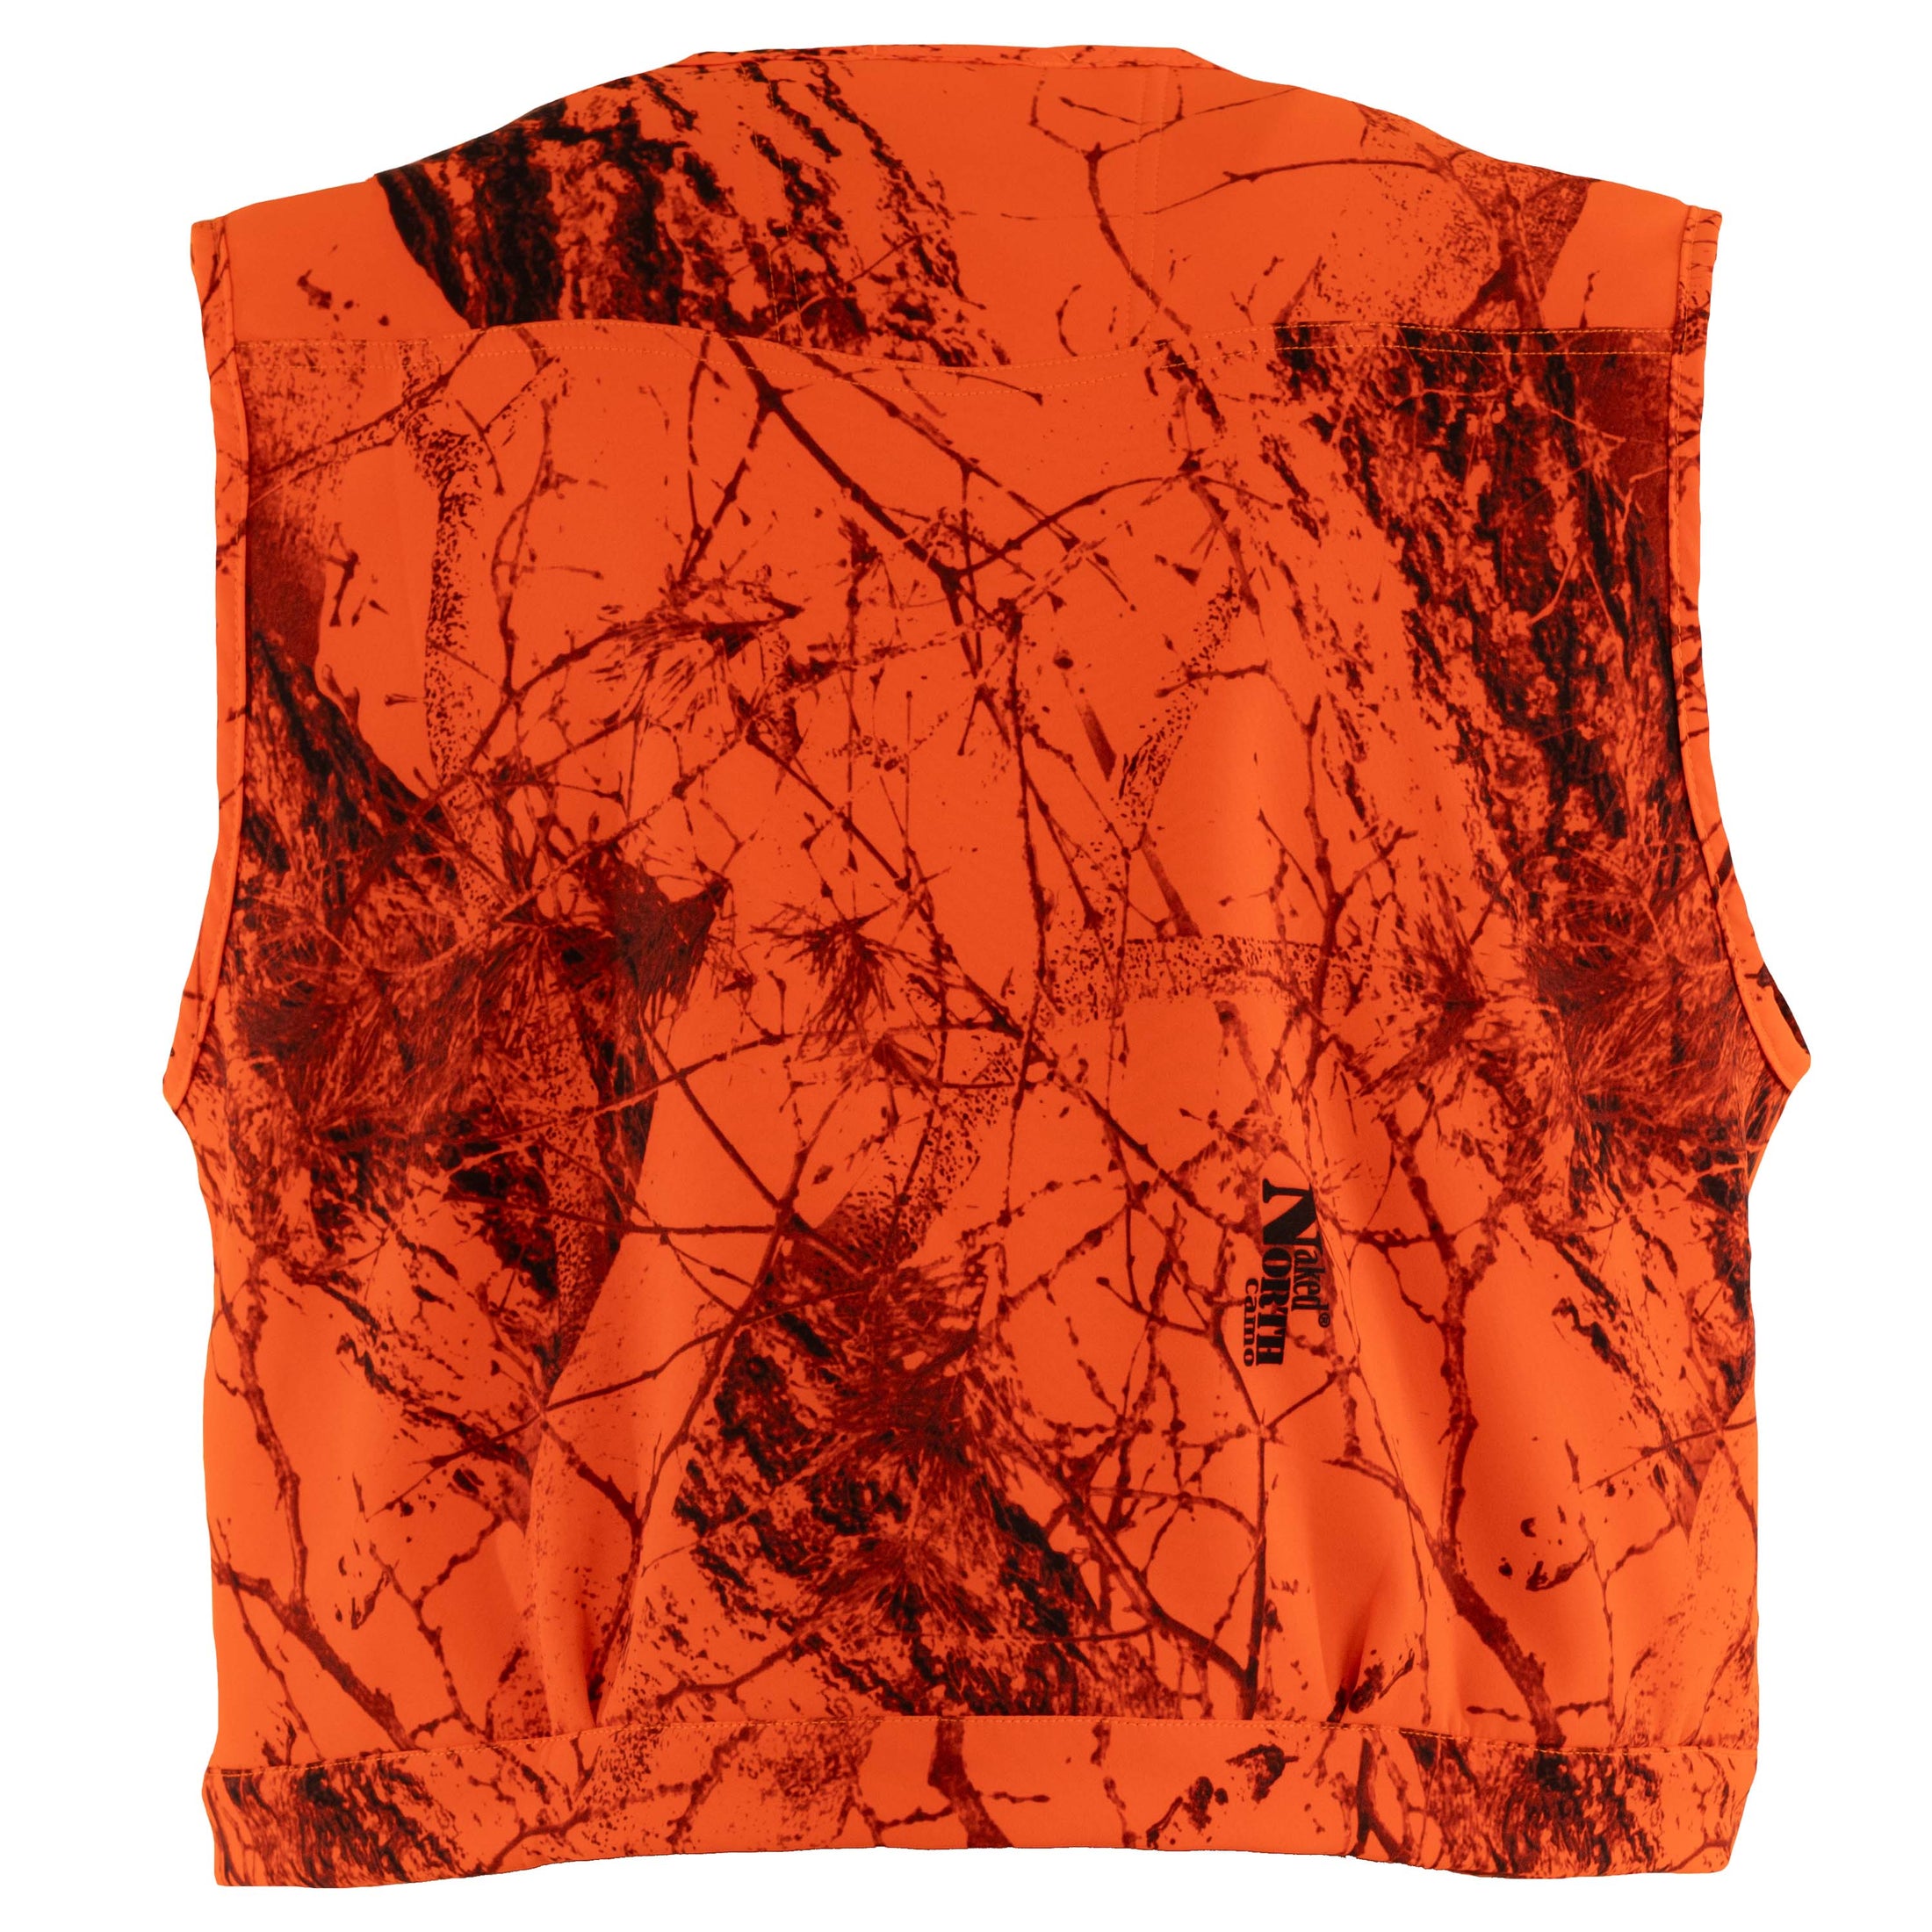 Open range vest - back view (naked north blaze orange camo)